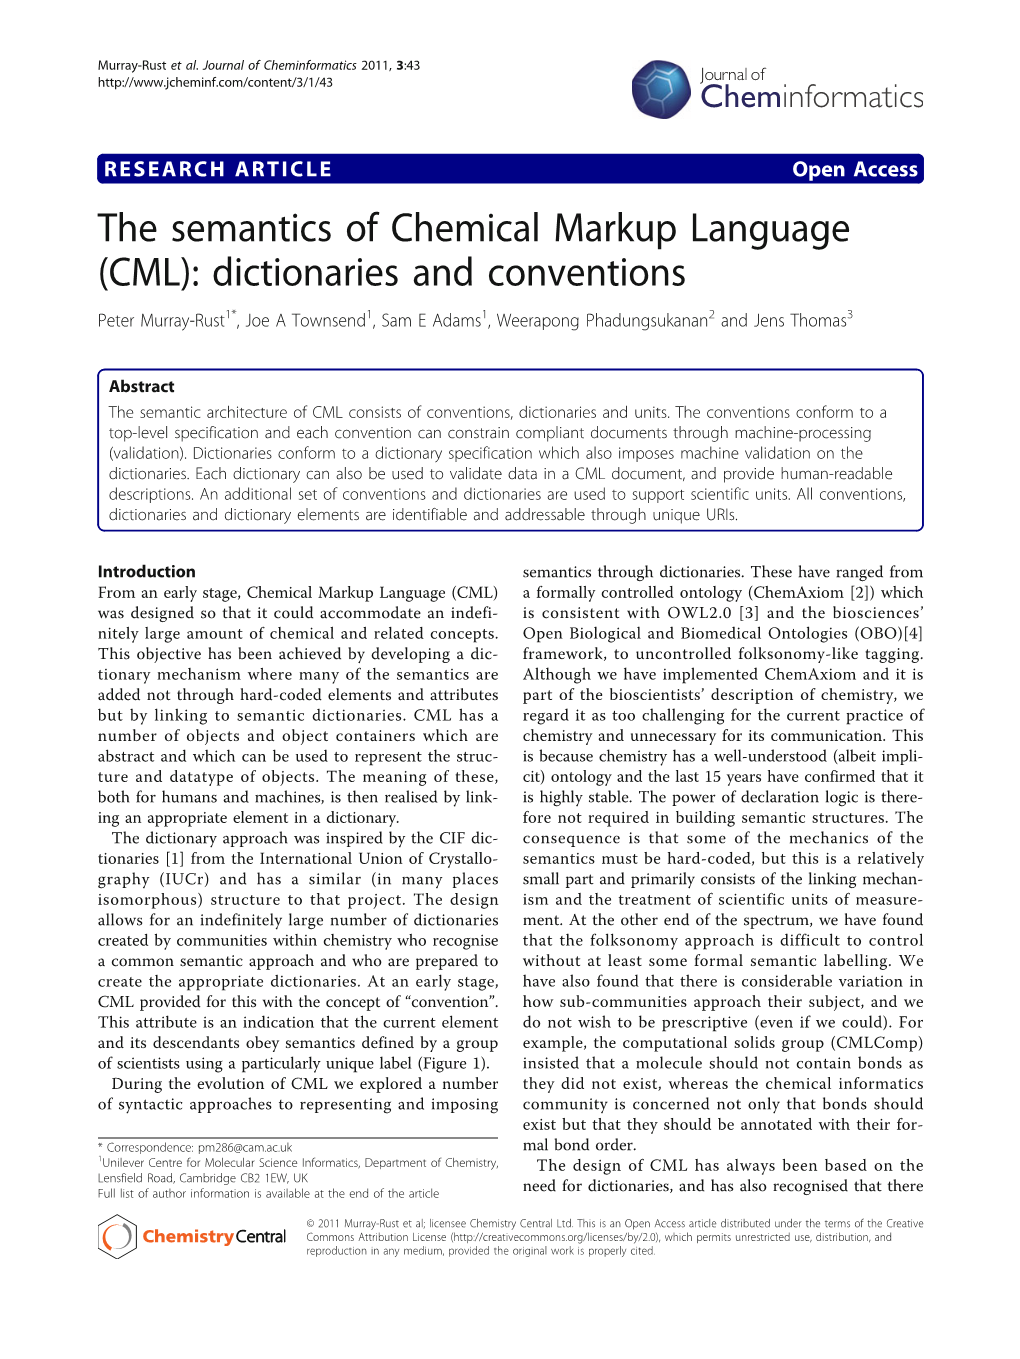 The Semantics of Chemical Markup Language (CML